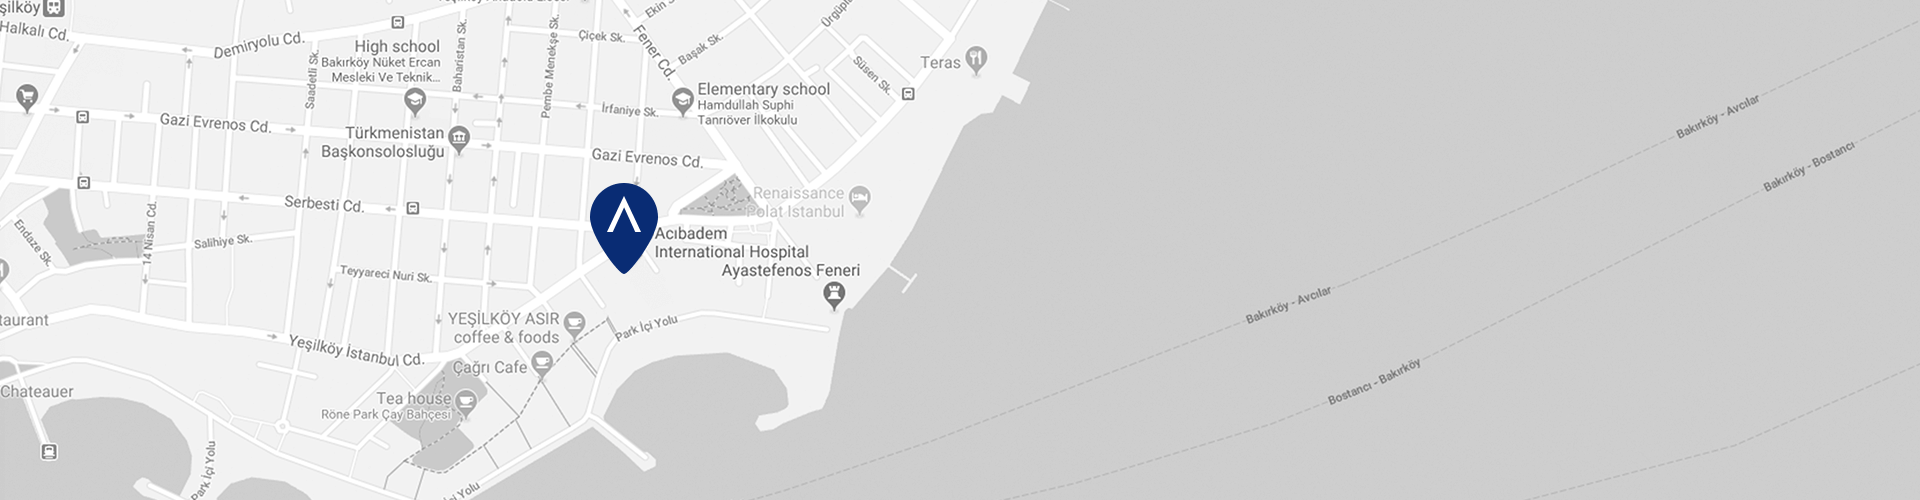 acibadem-international-hastanesi-google-maps-image.png